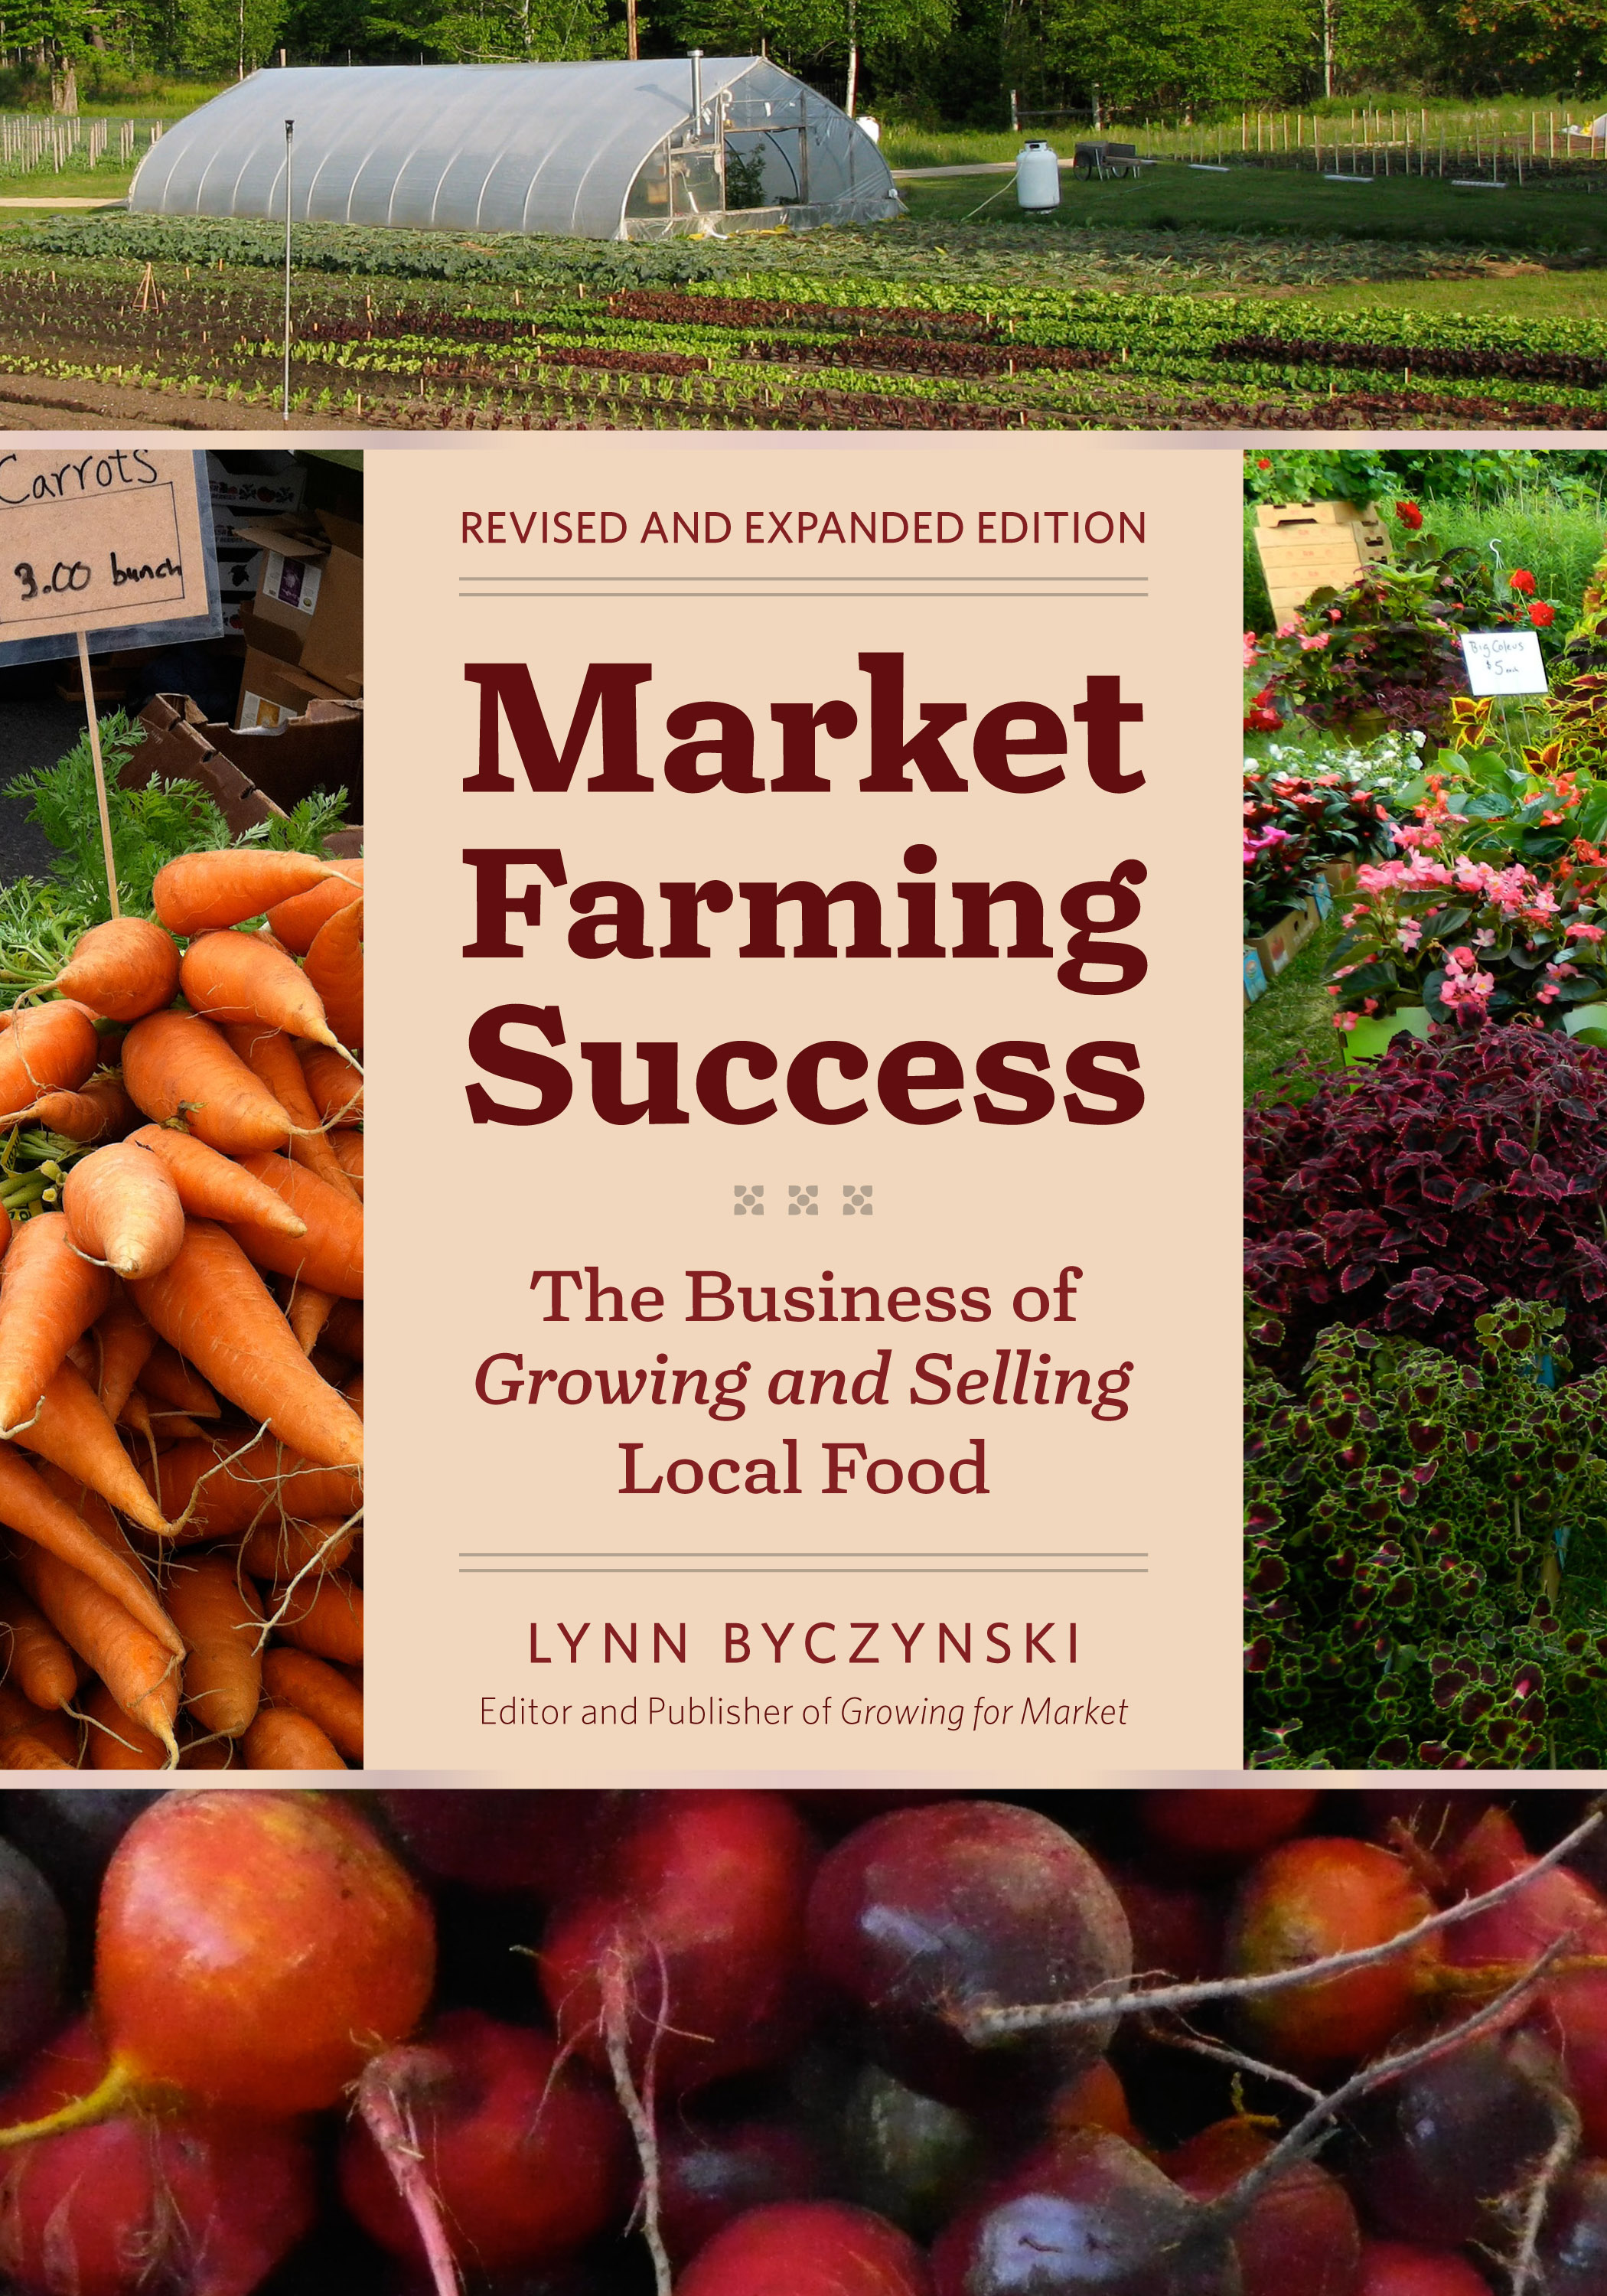 business plan in marketing harvested vegetables